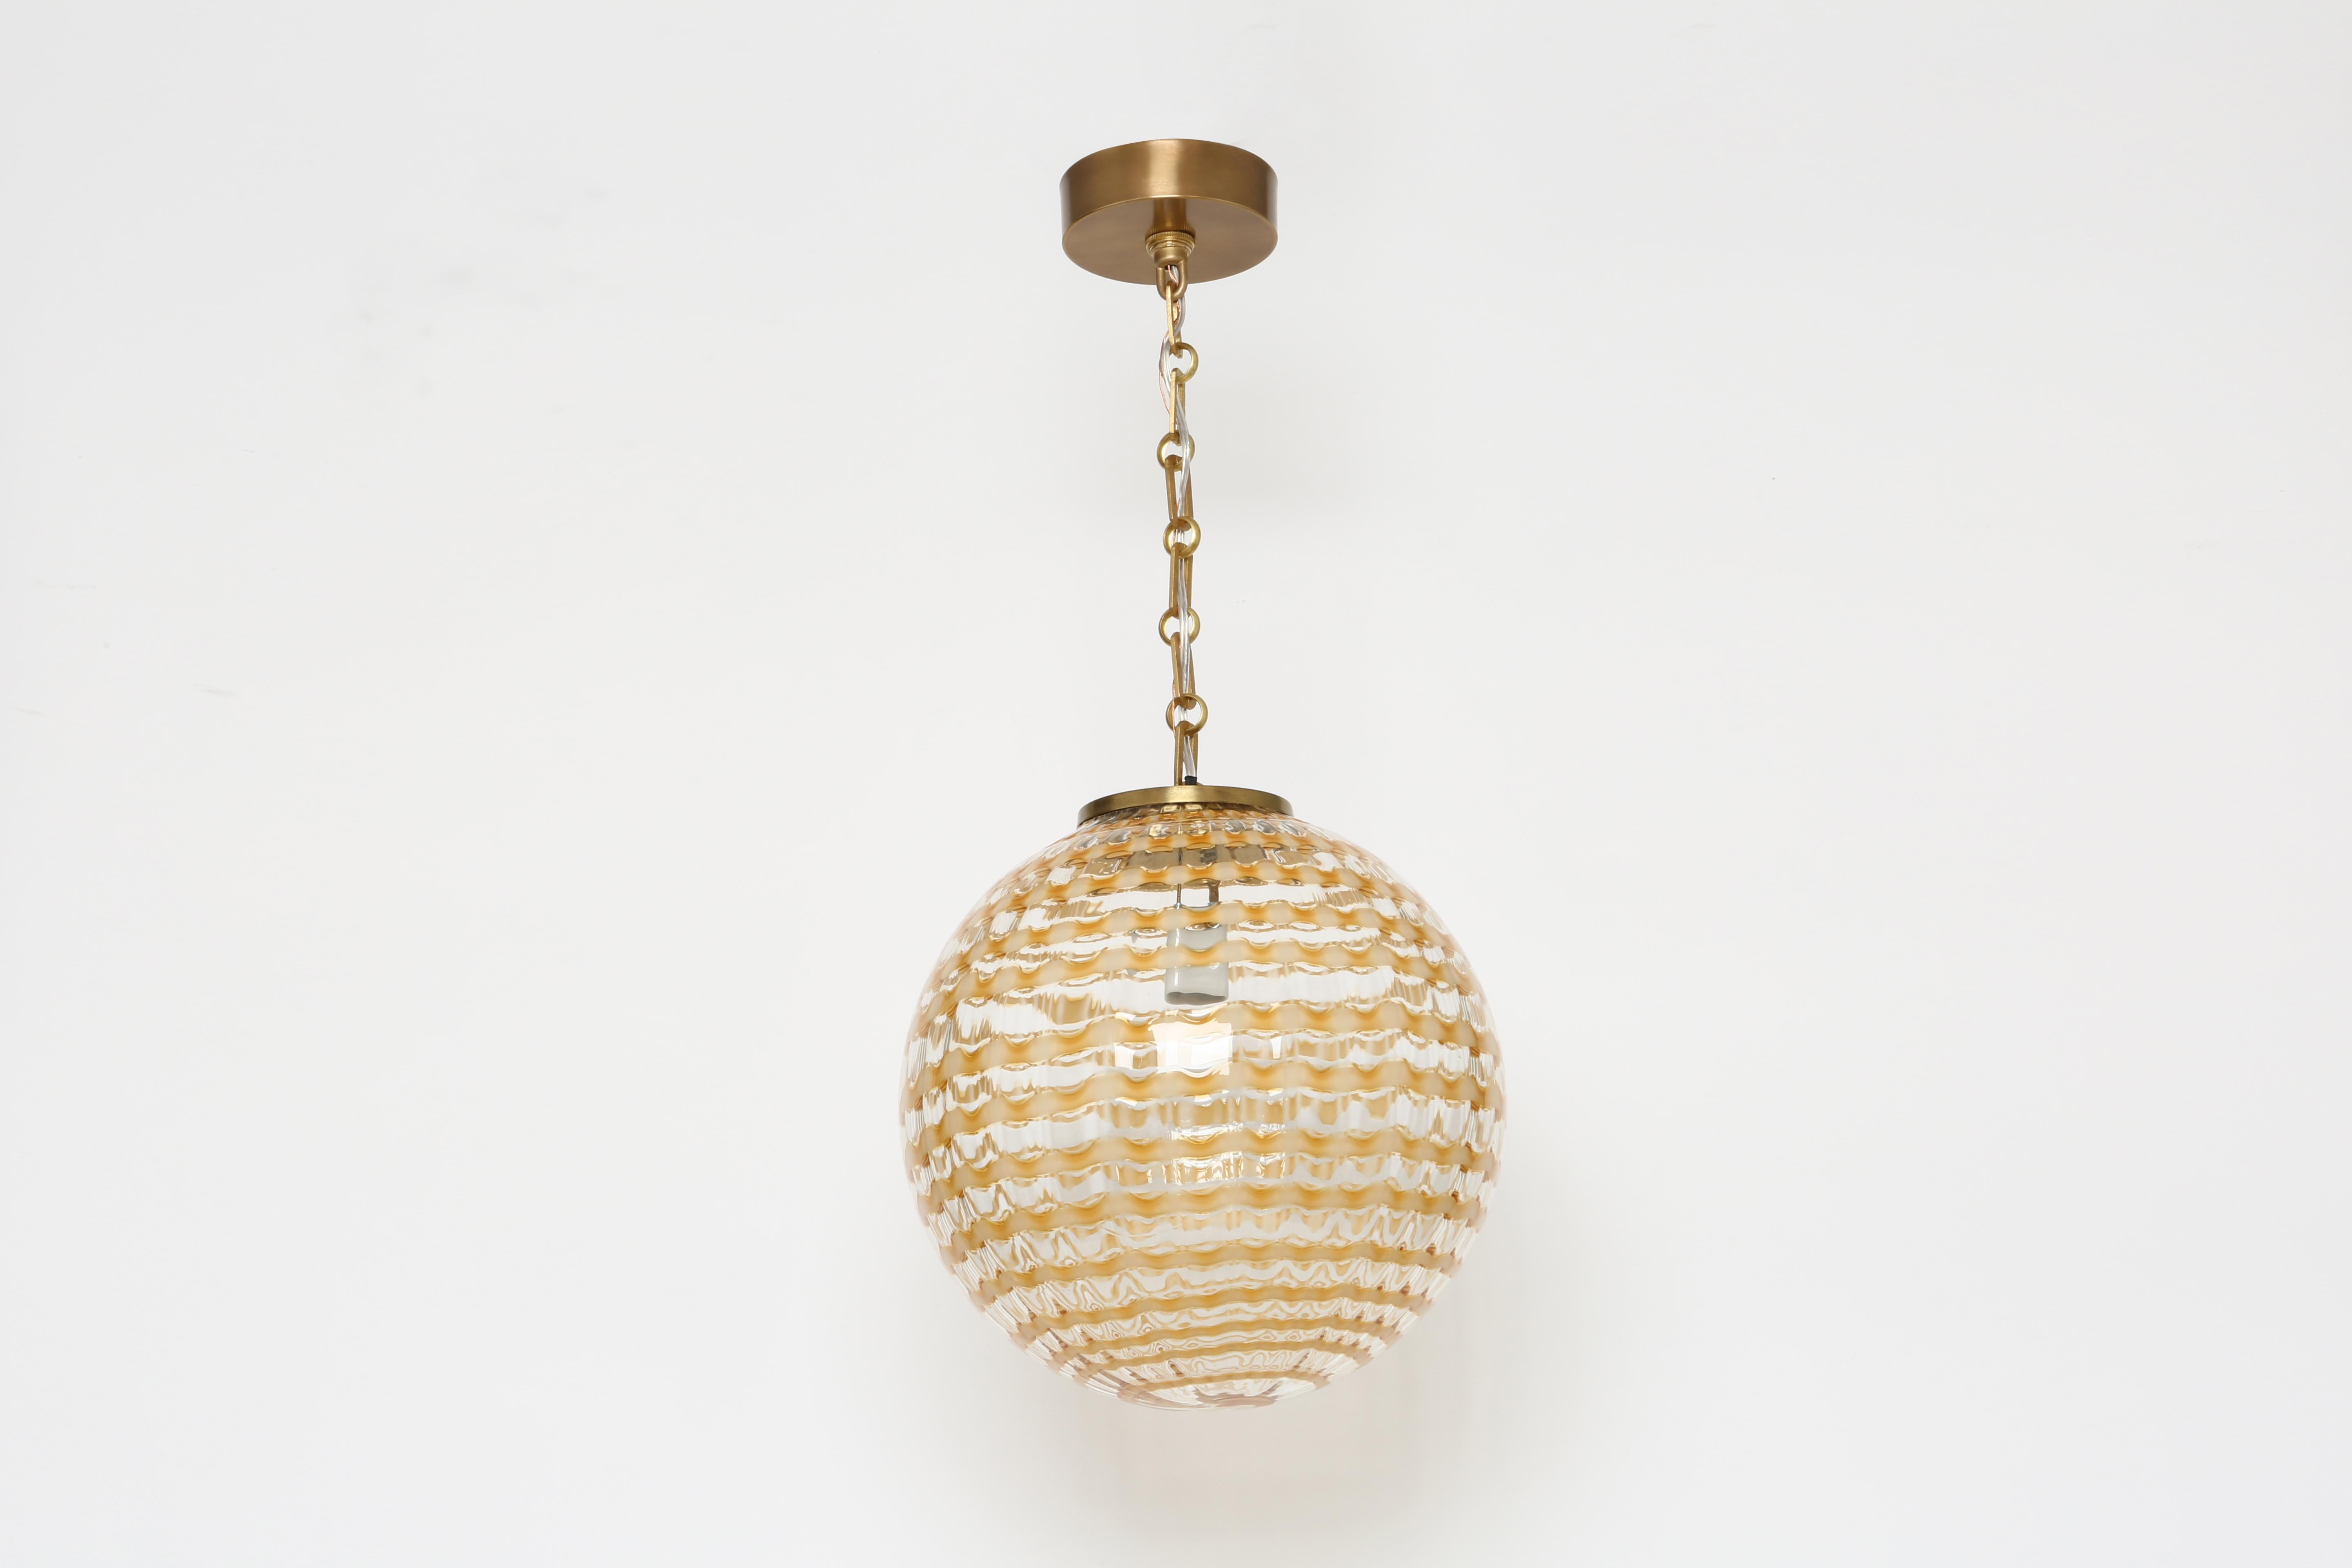 Murano glass globe pendant.
Italy 1970s.
Hand blown glass, patinated brass.